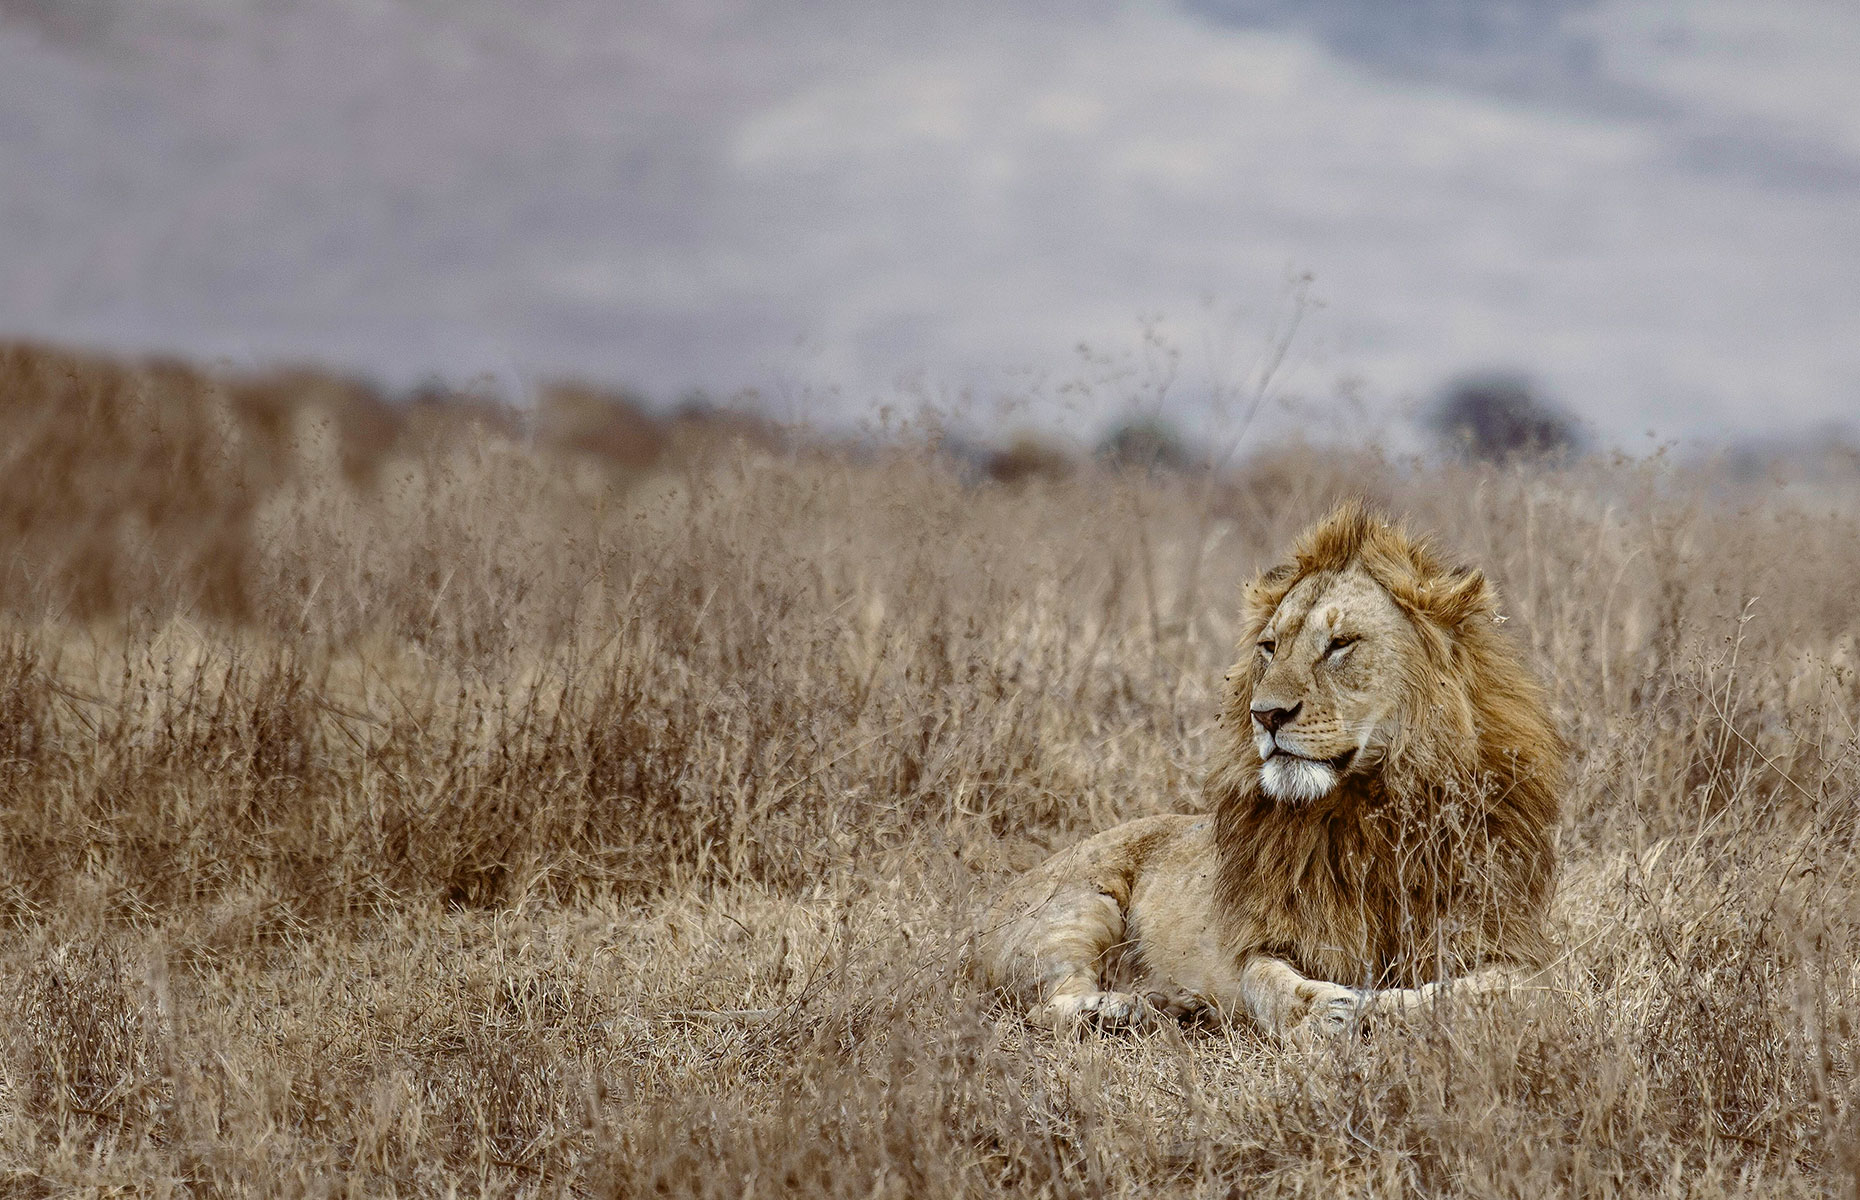 A lion in the Serengeti (Image: Copyright Nori Jemil)